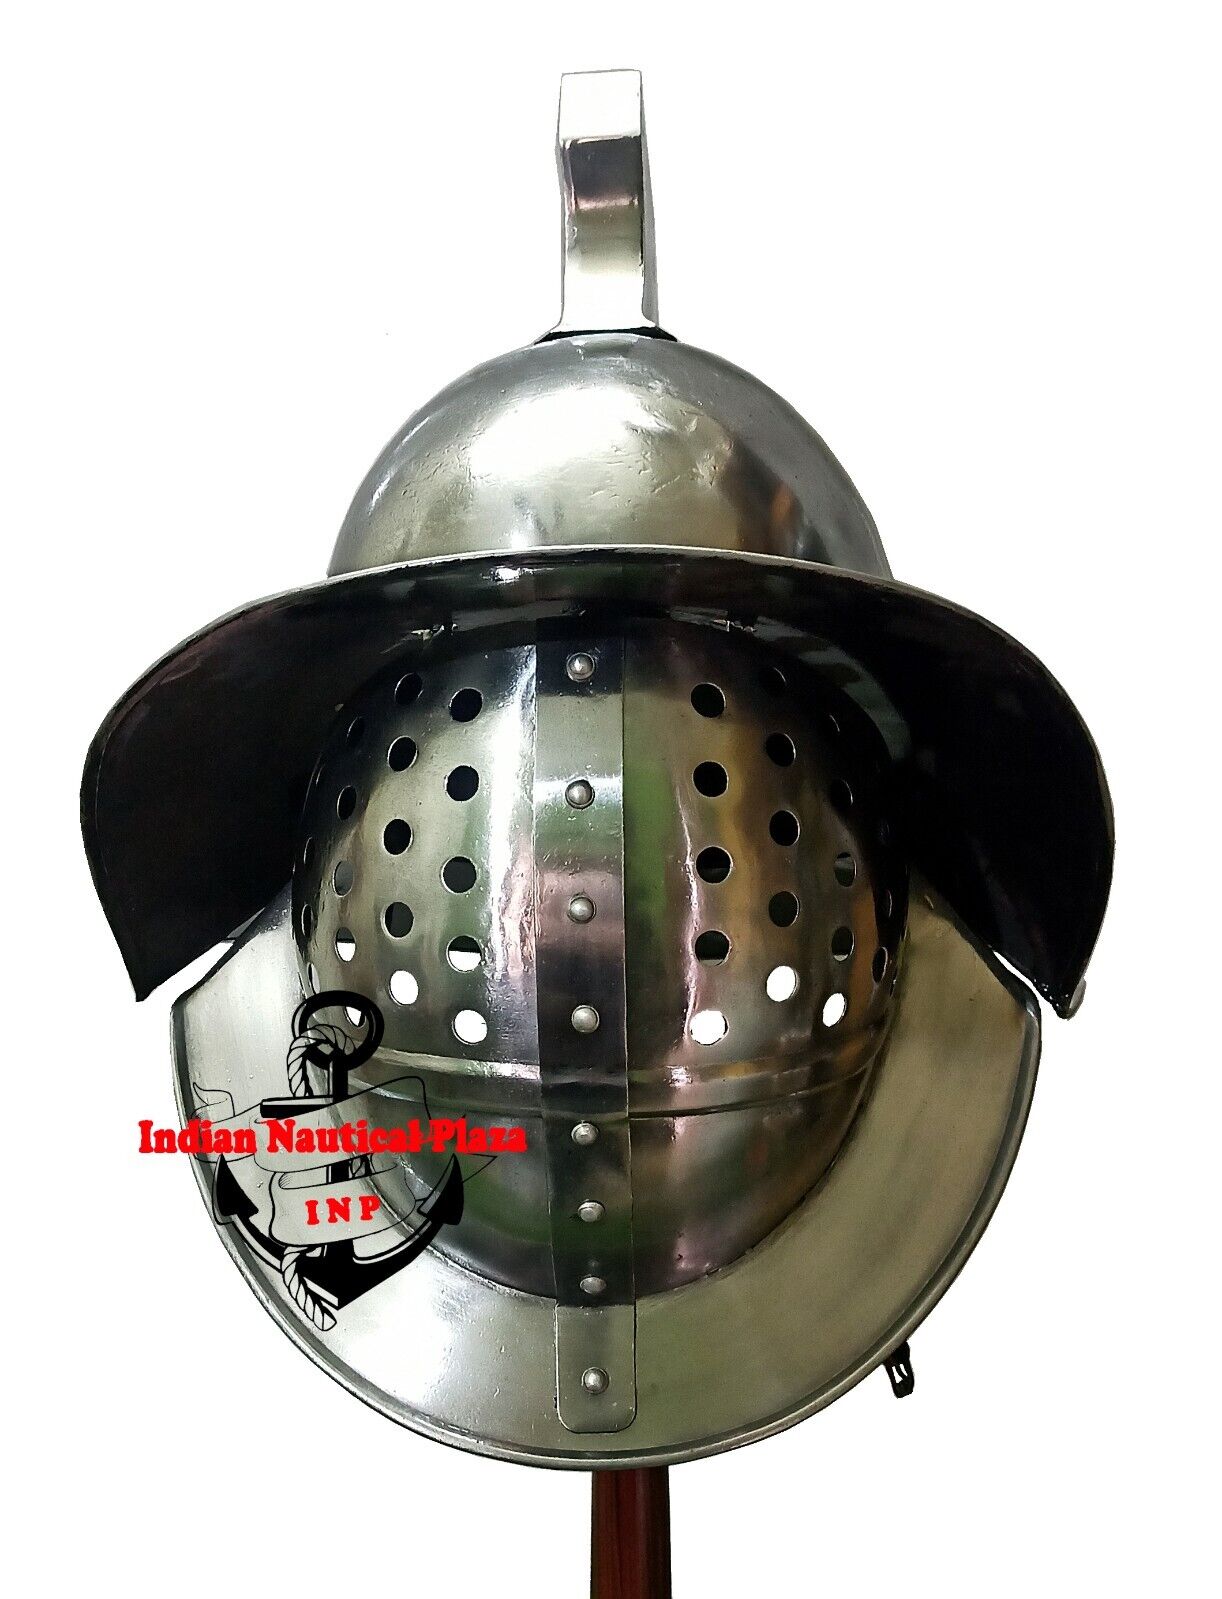 Larp Farbri Murmillo Gladiator Helmet Medieval Knight Crusader Fabri Armor Suit